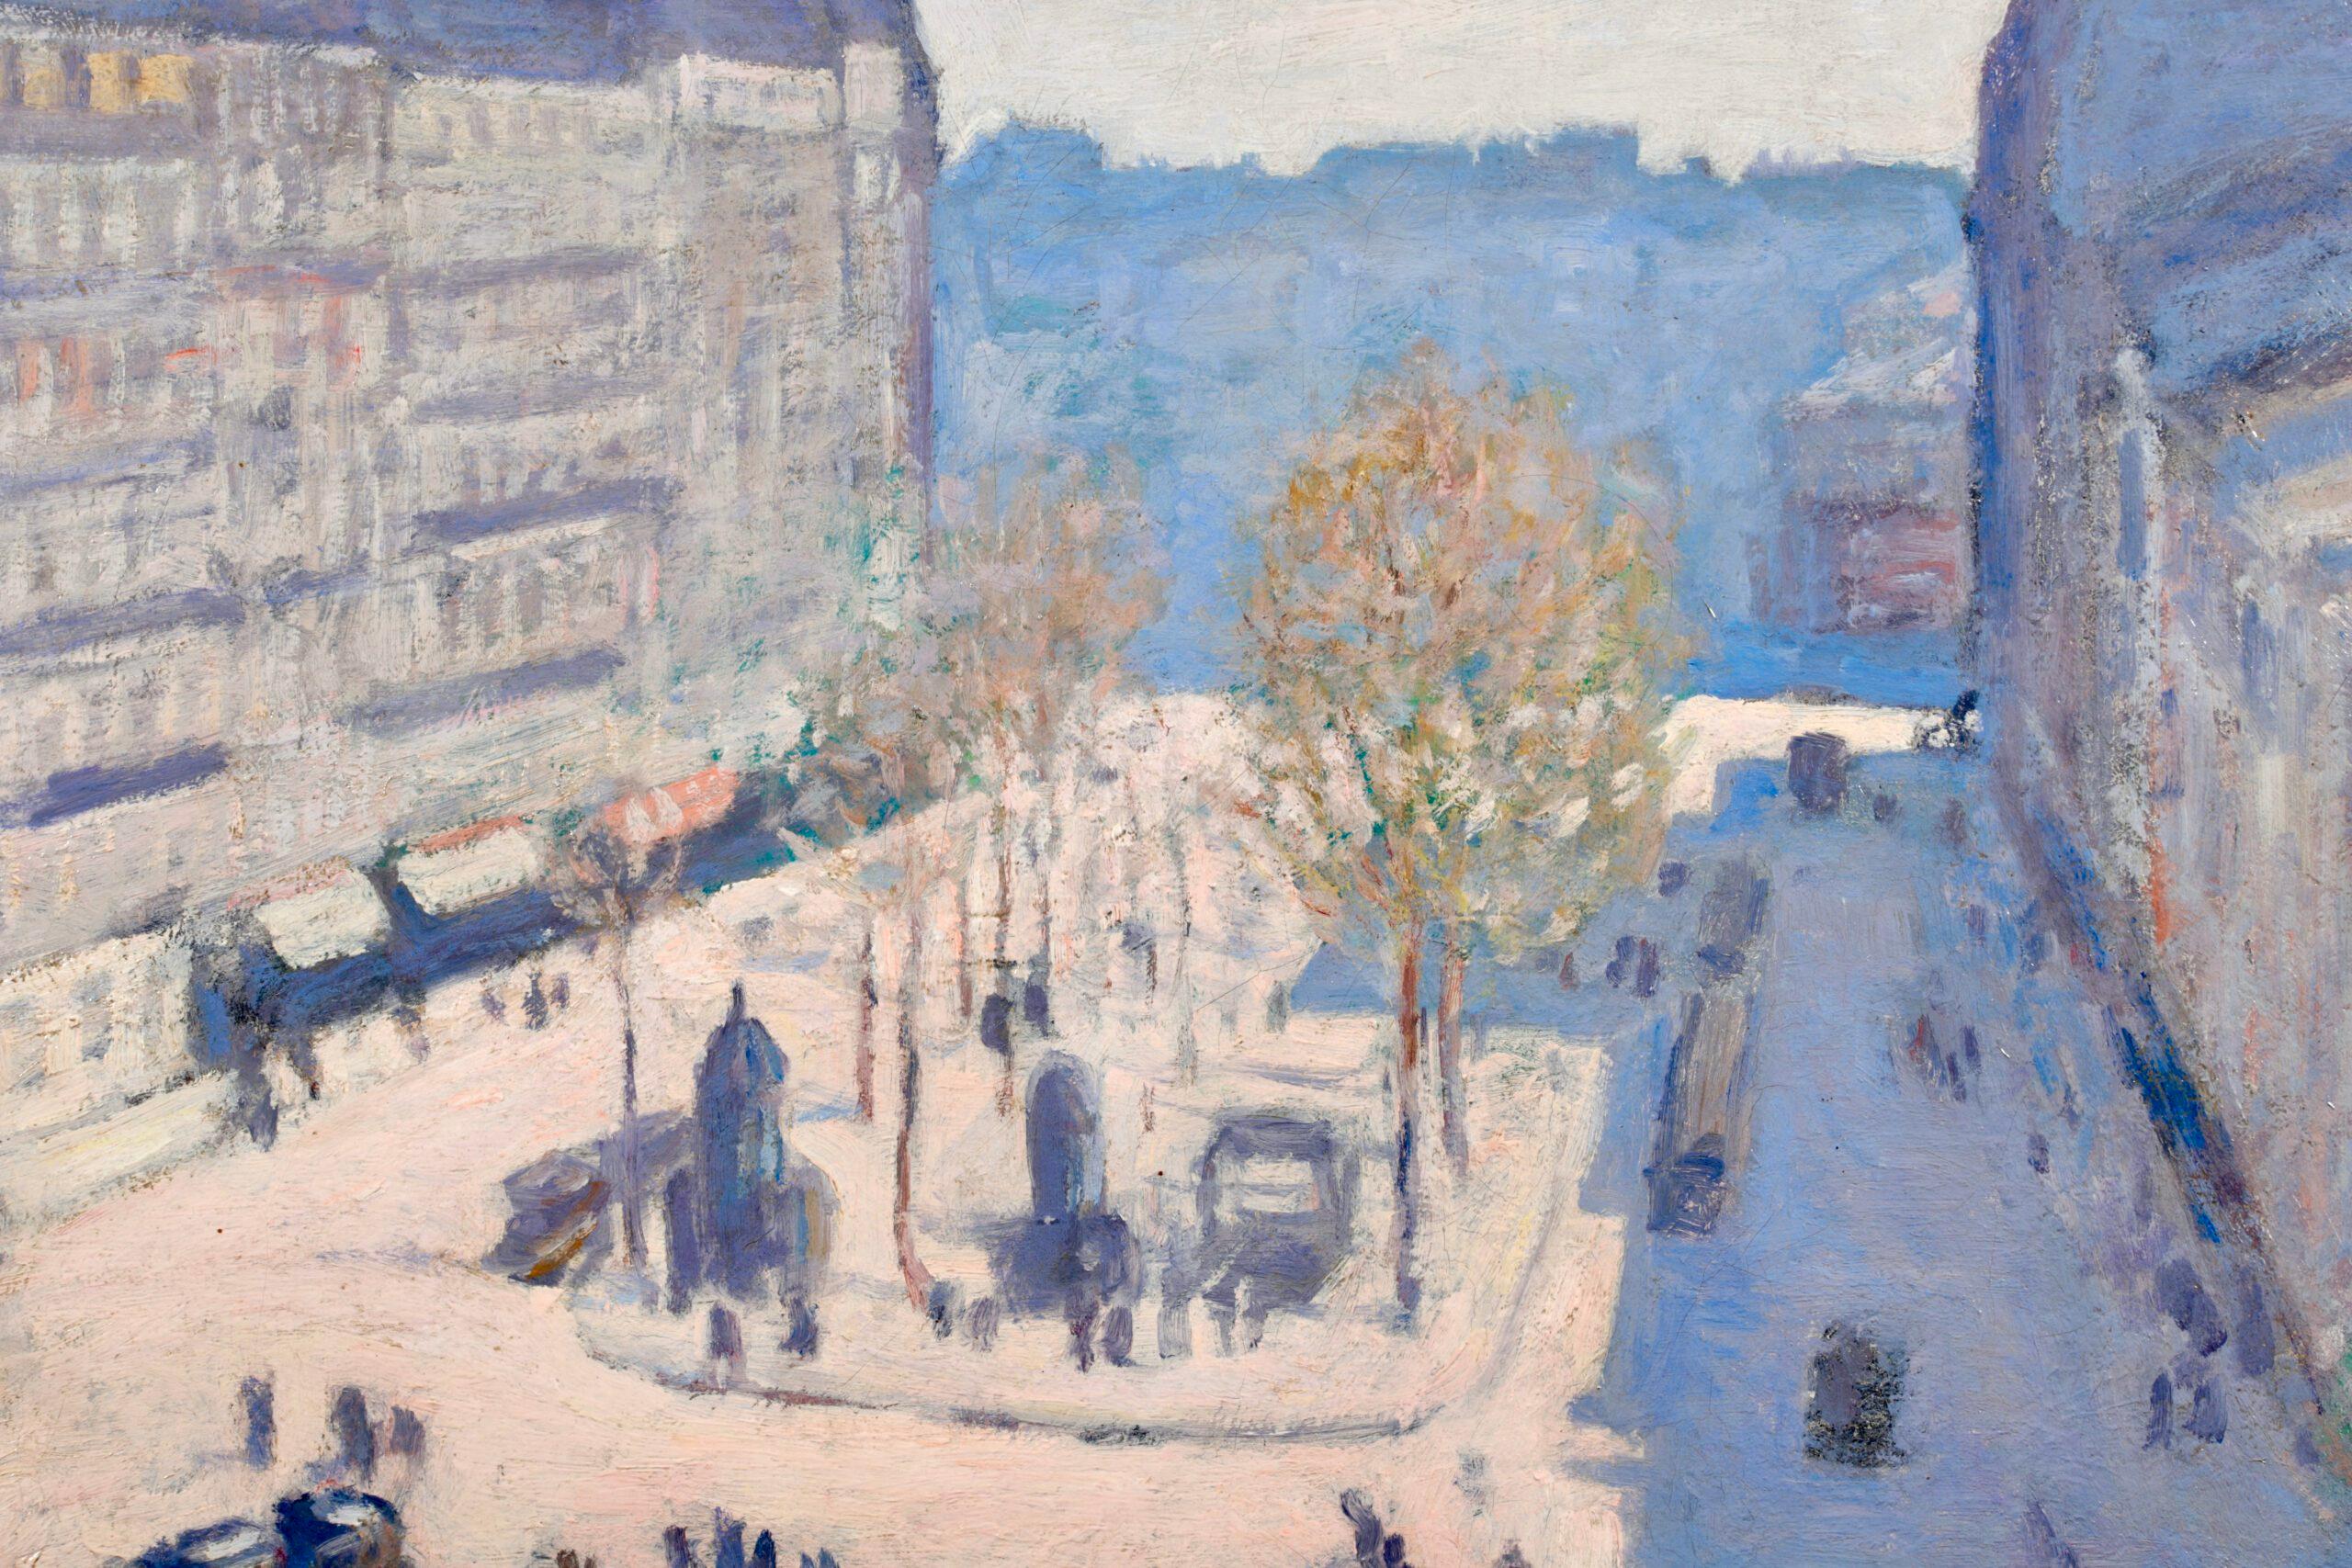 Boulevard De Clichy - Post Impressionist City Landscape Painting by Albert Andre For Sale 6